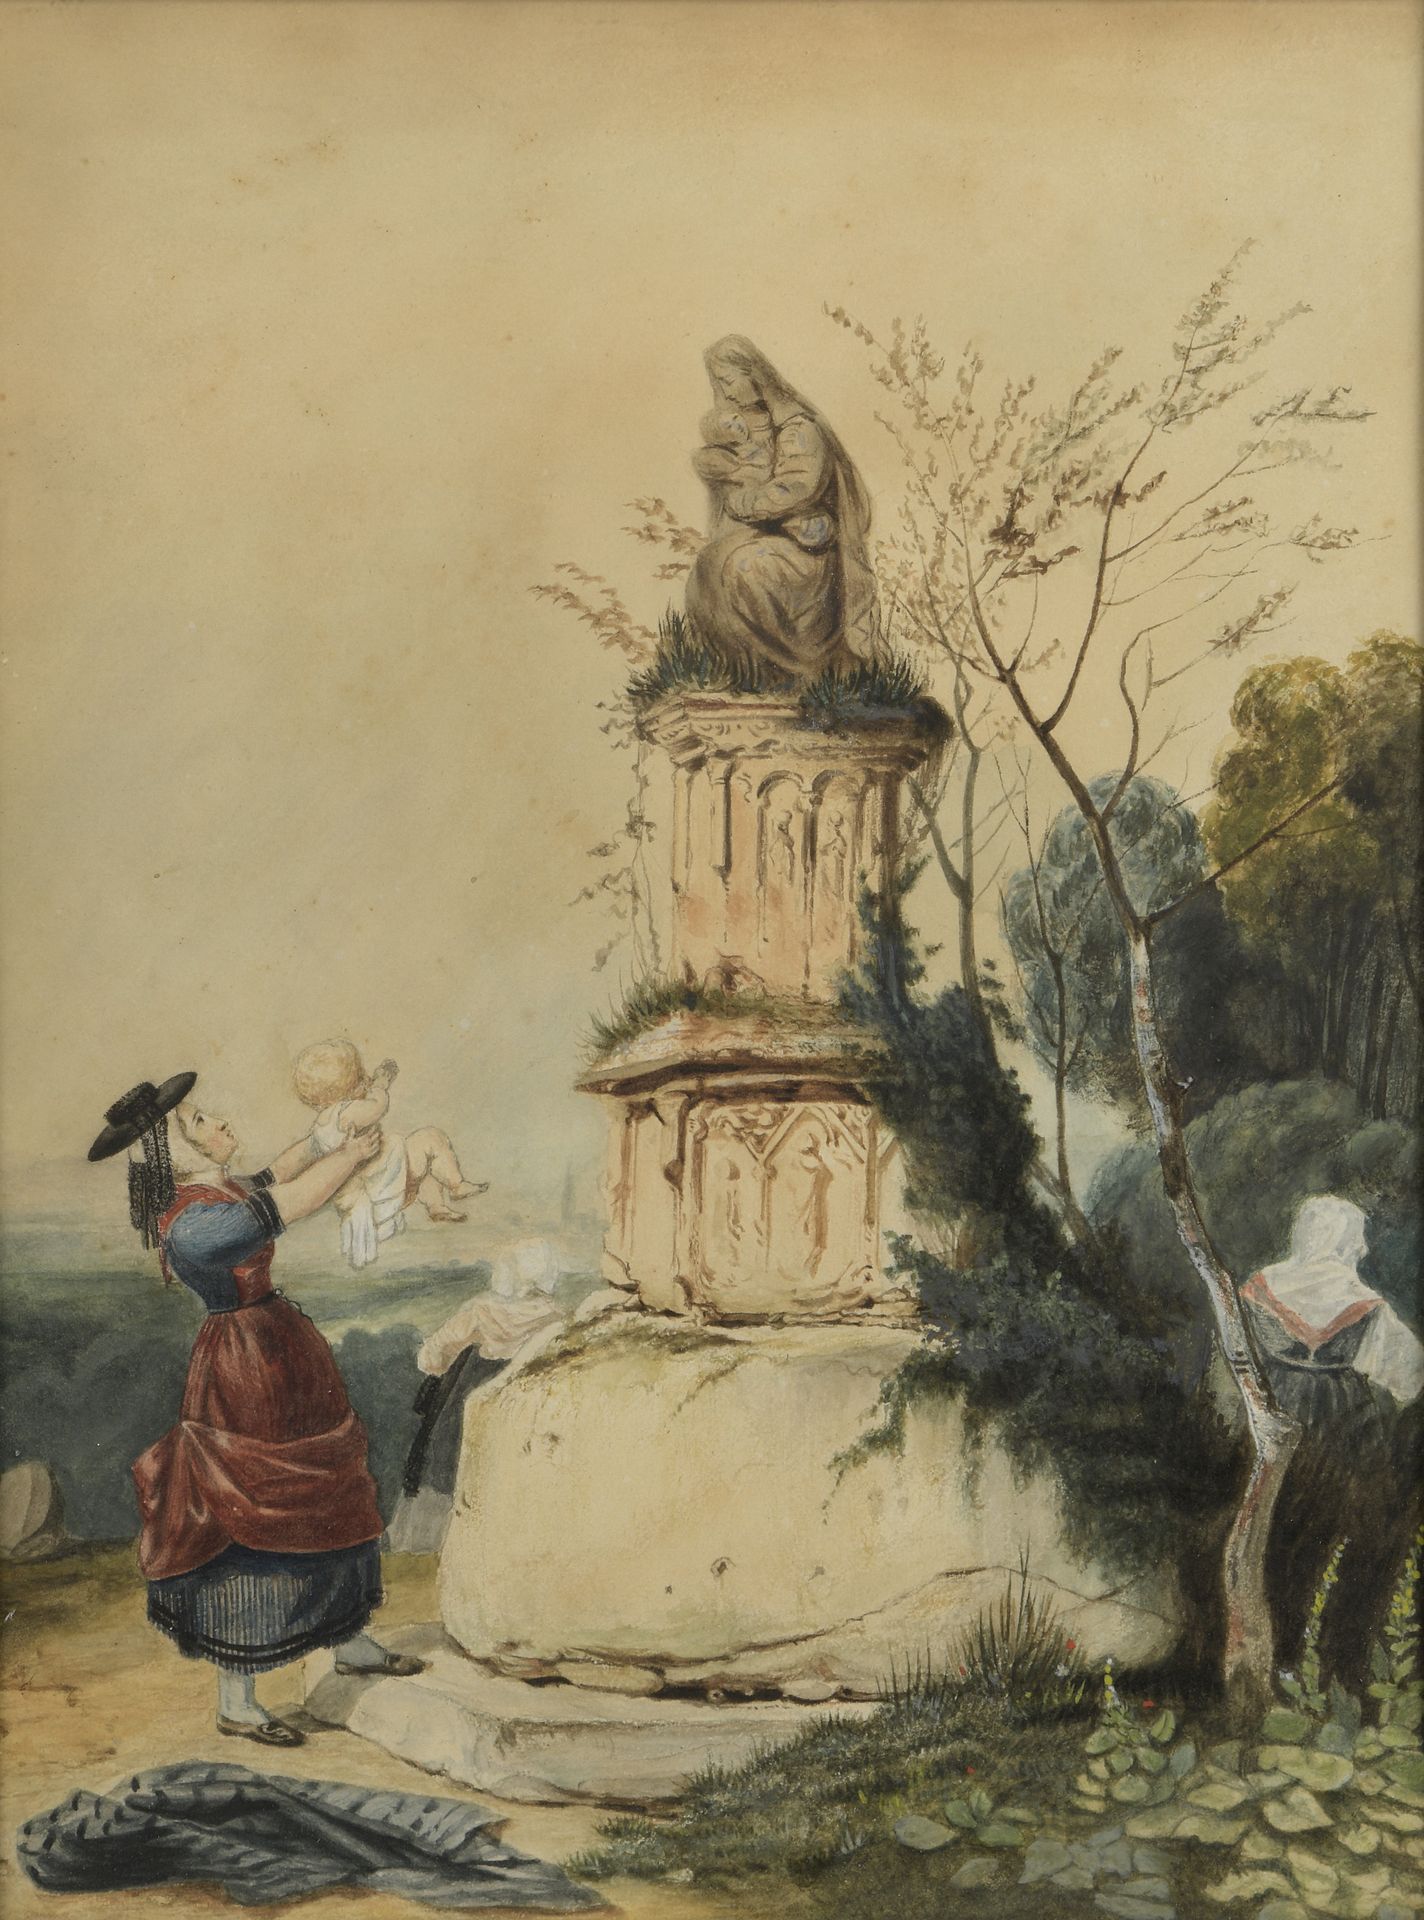 Null 路易-阿吉诺 (1802?-1889?)

妇女向圣母雕像介绍她的孩子

水粉画

30 x 23 cm